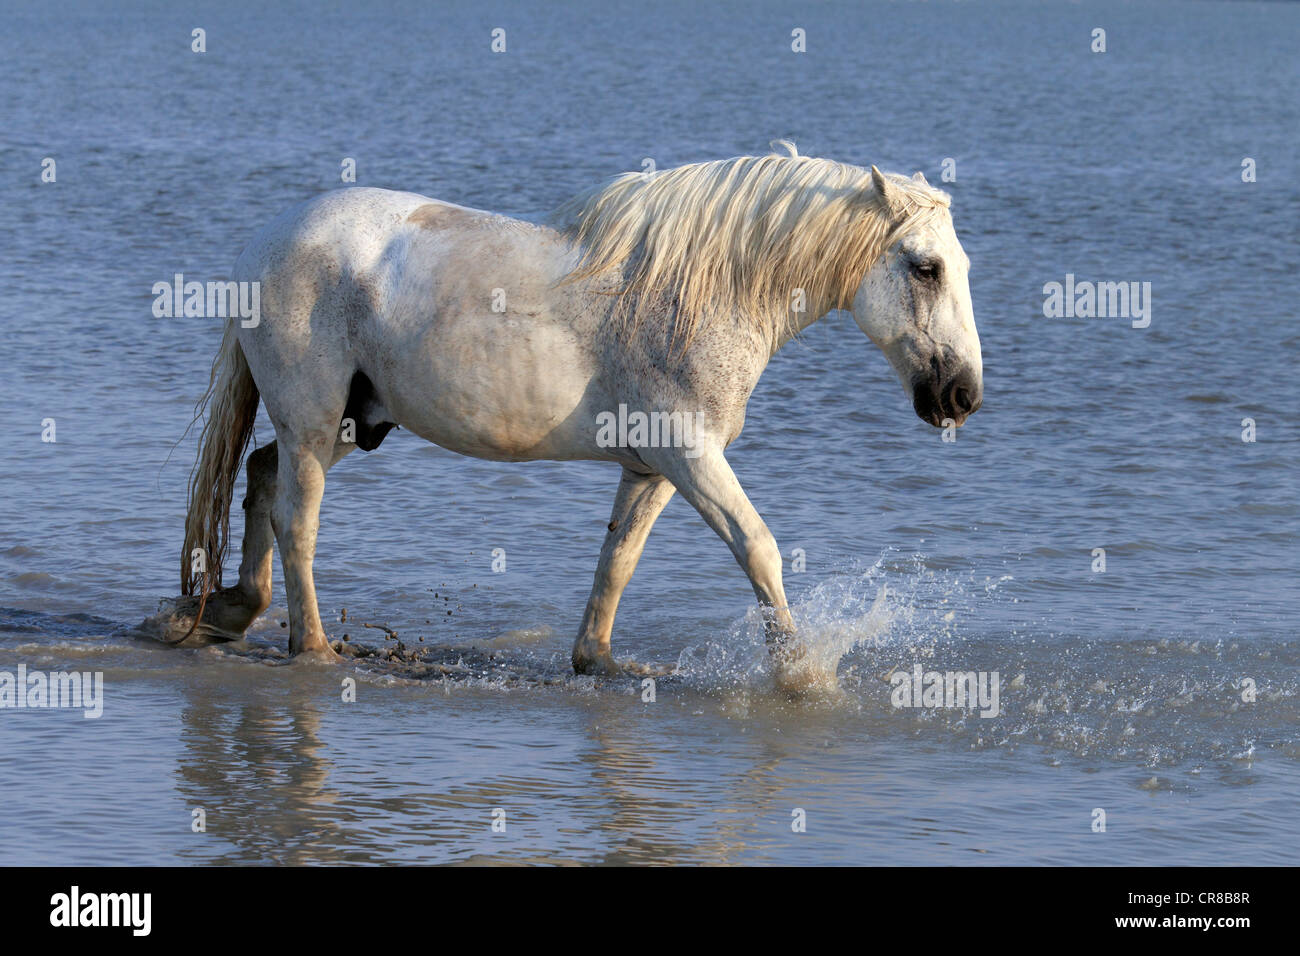 Camargue horse (Equus caballus), in water, Saintes-Marie-de-la-Mer, Camargue, France, Europe Stock Photo